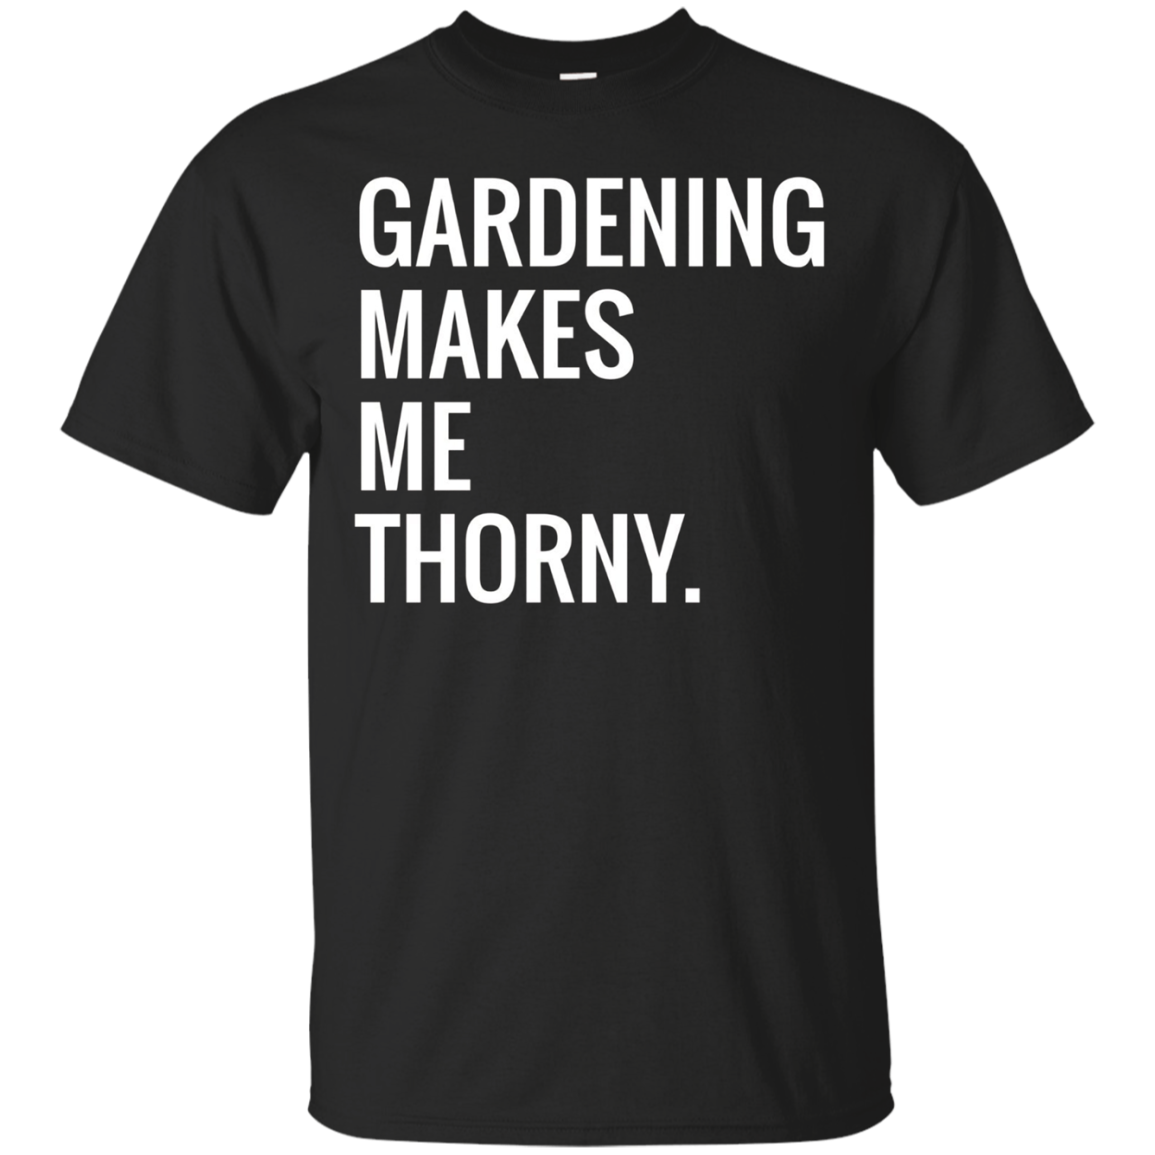 Funny Garden T Shirt - Gardening Makes Me Thorny!